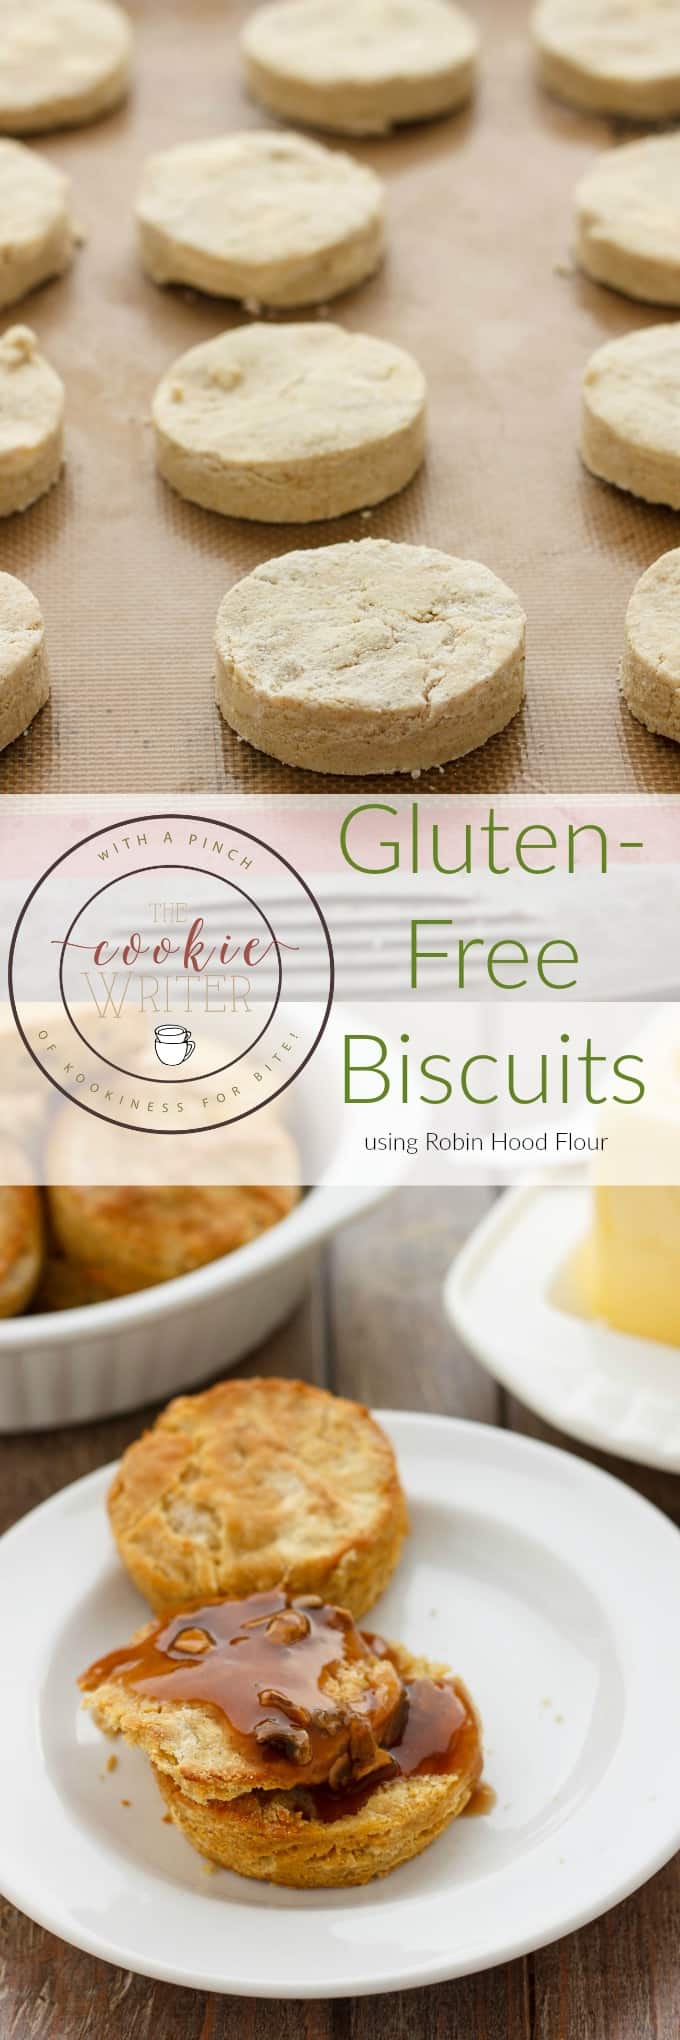 Gluten-Free Biscuits made with Robin Hood Nutri Flour Blend #glutenfree